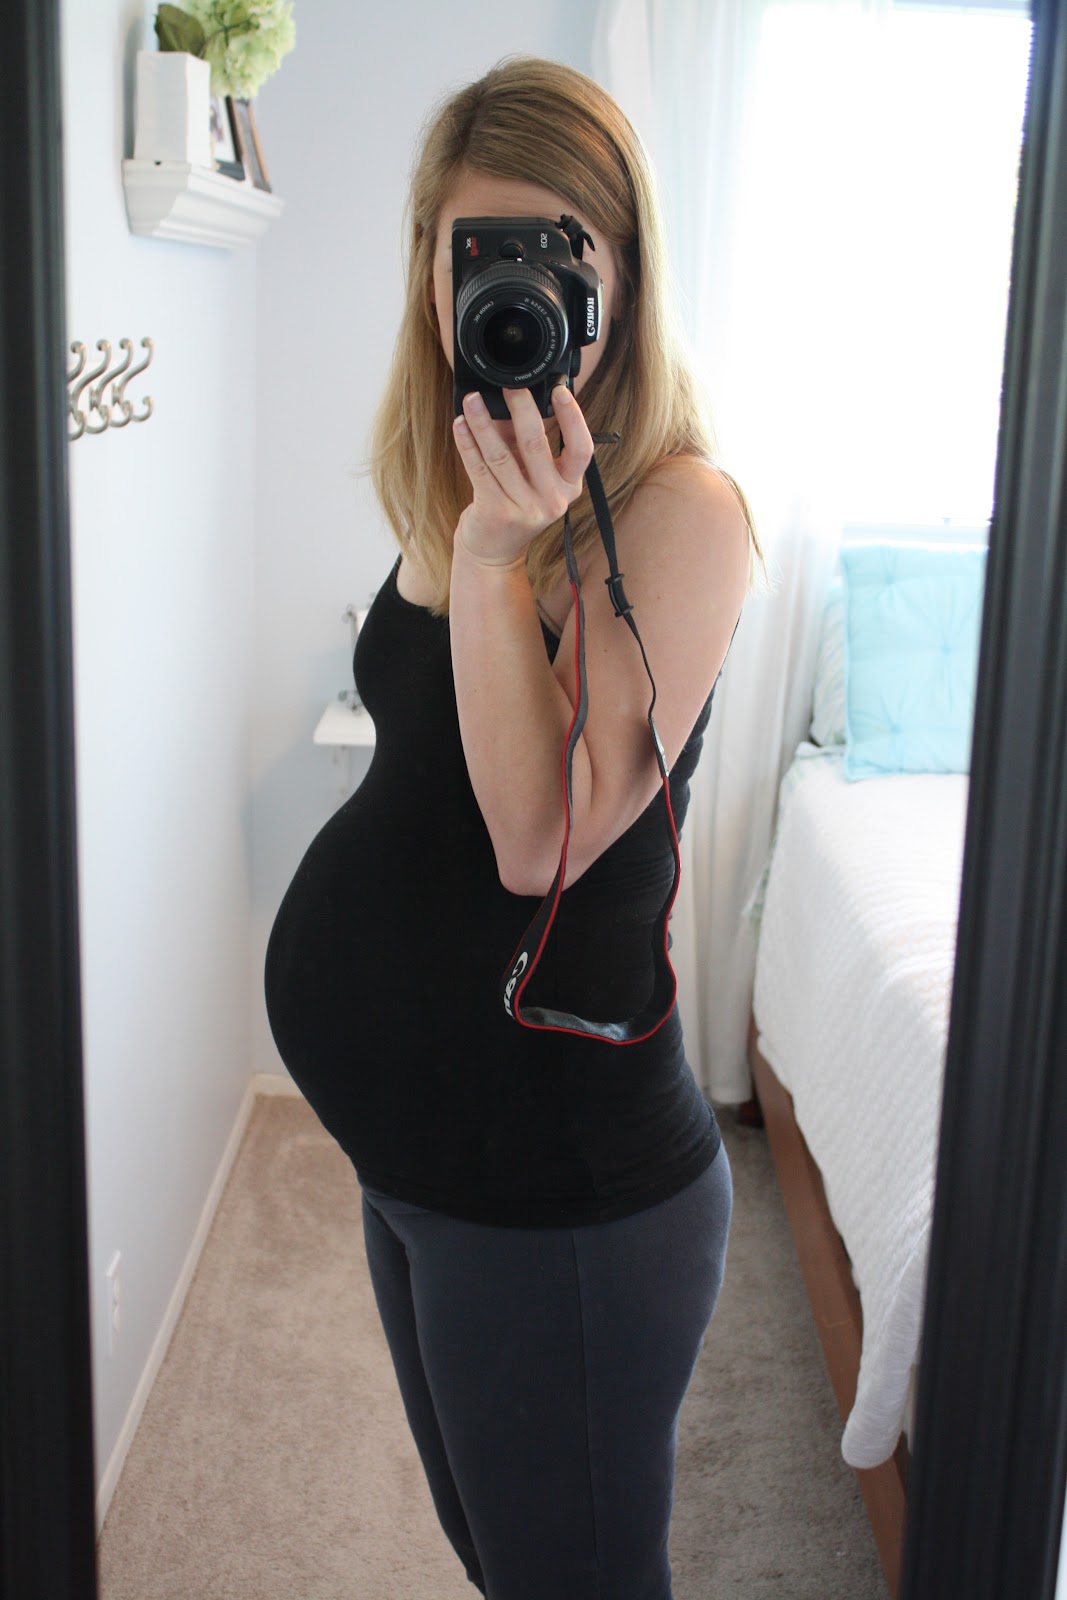 33 week baby bump photo